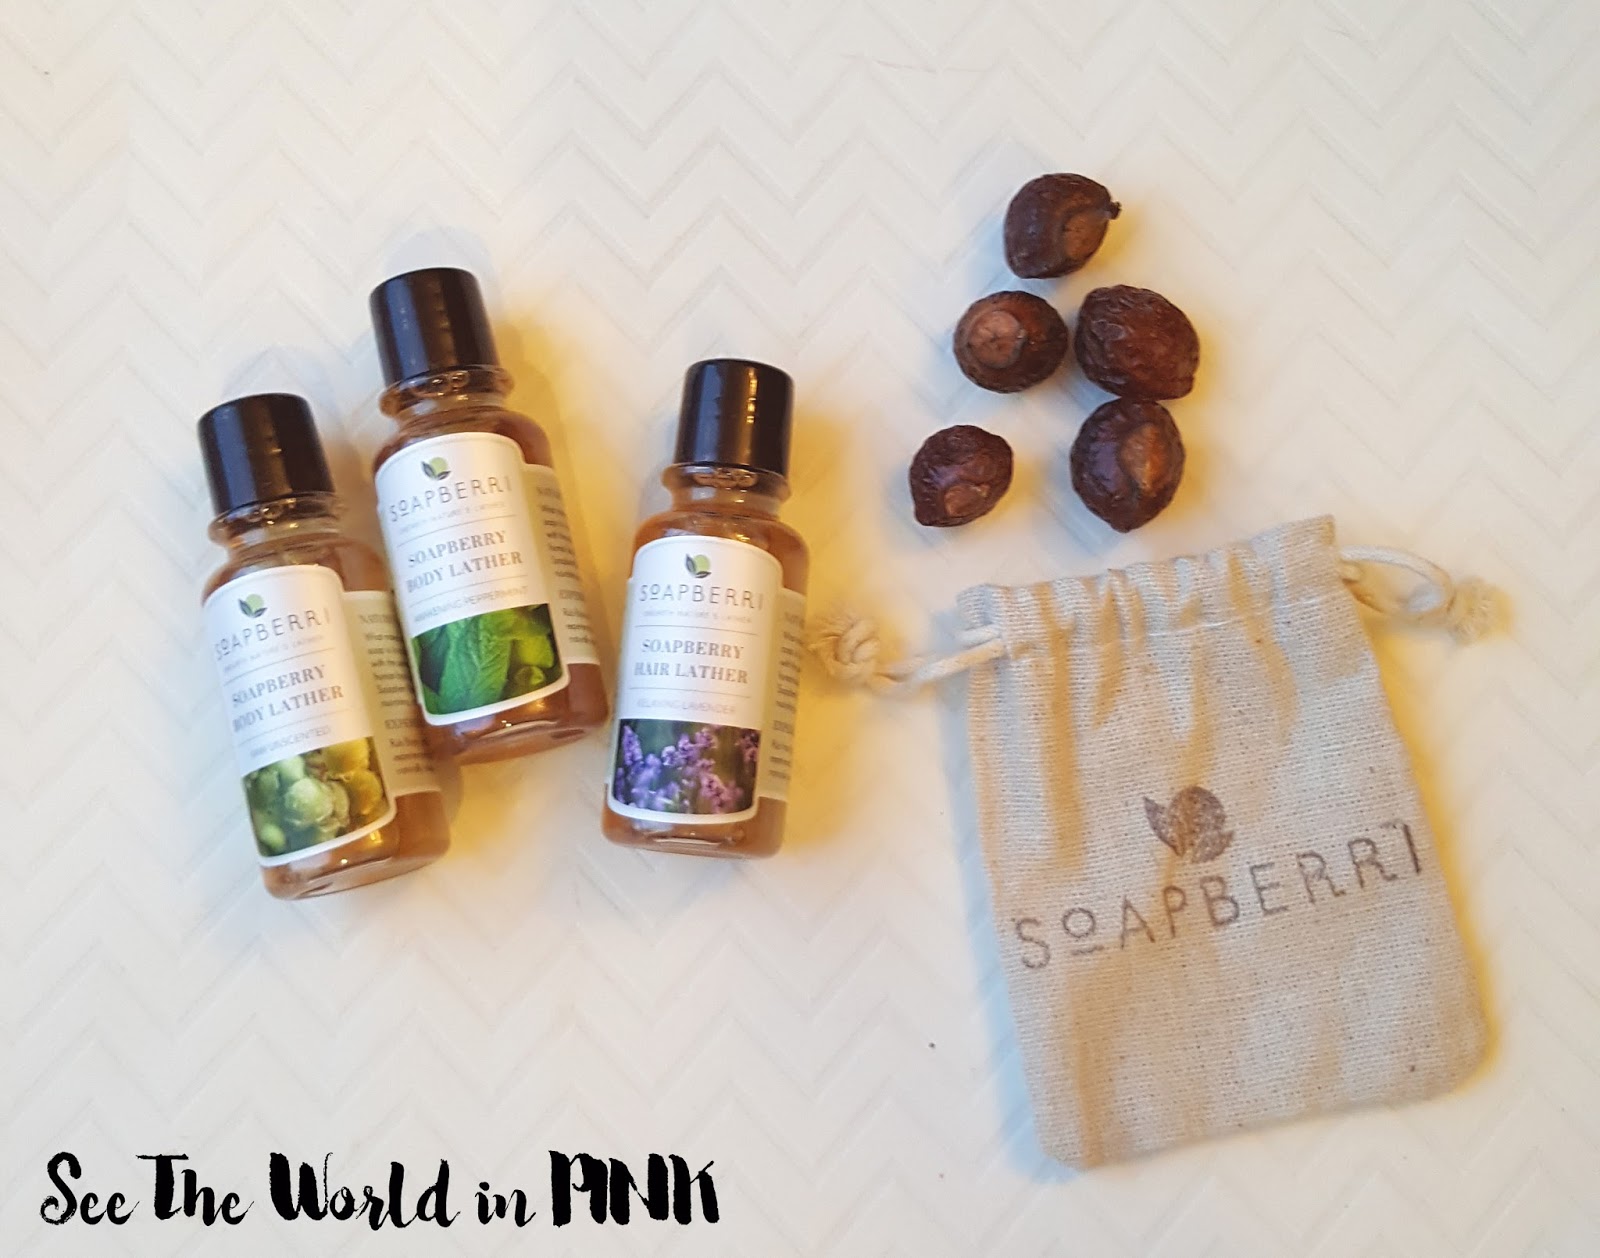 Skincare Sunday - "Tree To Tub" Soapberri Co. Products 